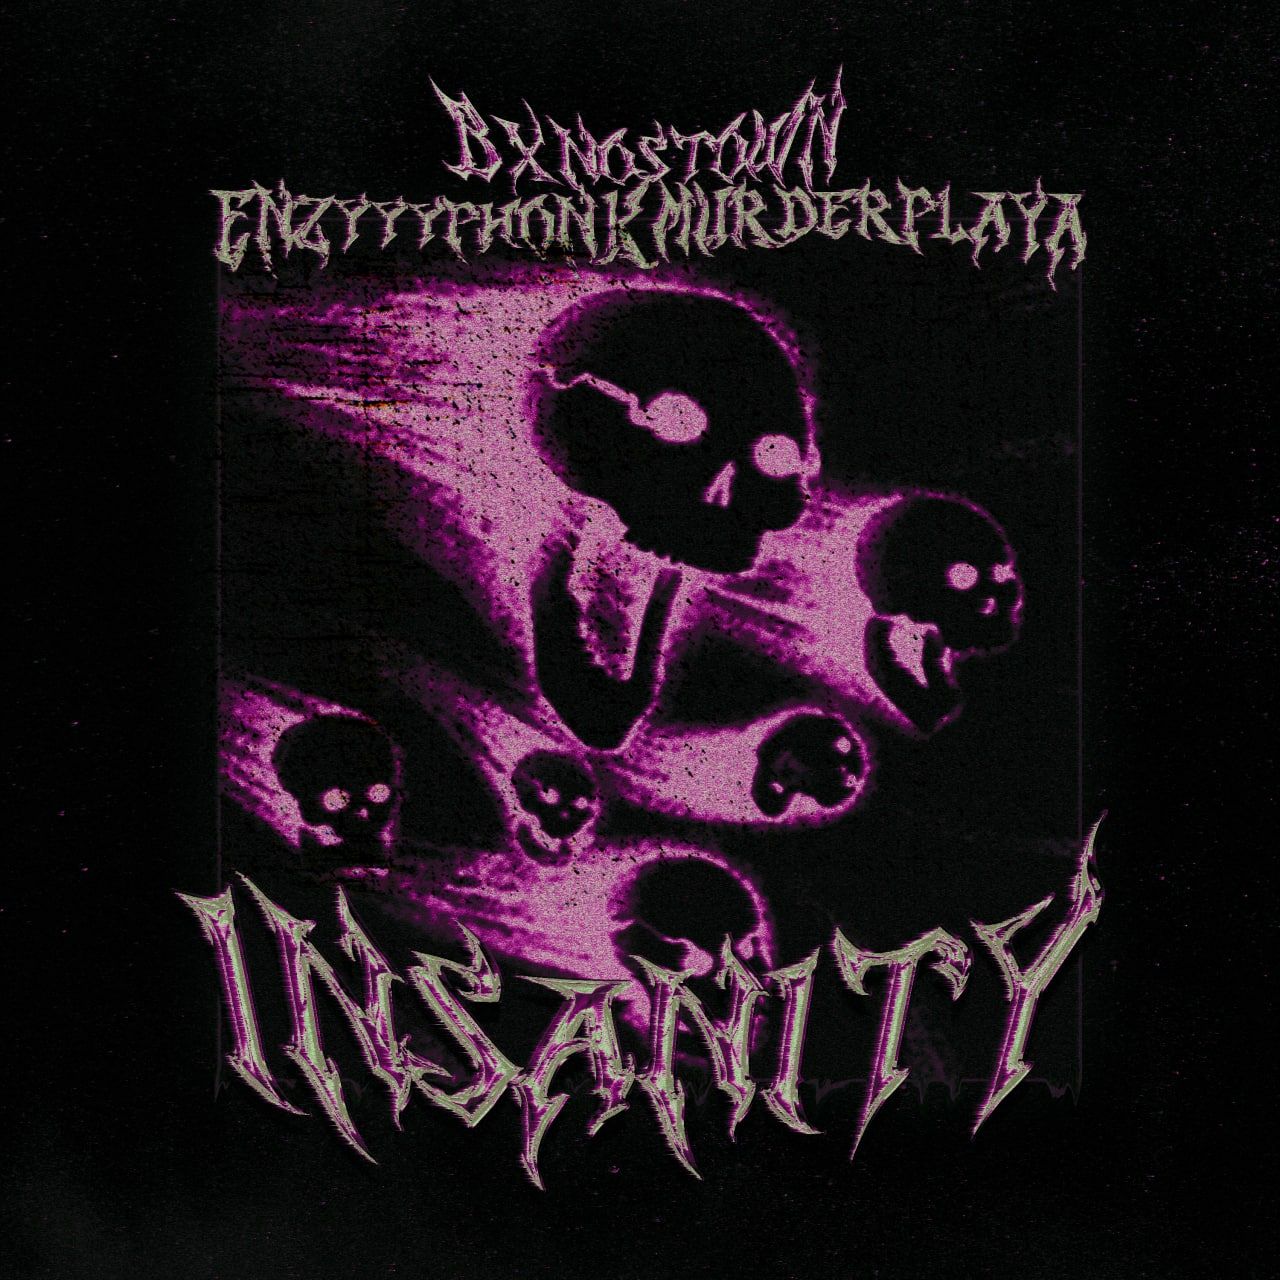 Descarregar Insanity-BXNOSTOWN & ENZYYYPHONK & MURDERPLAYA